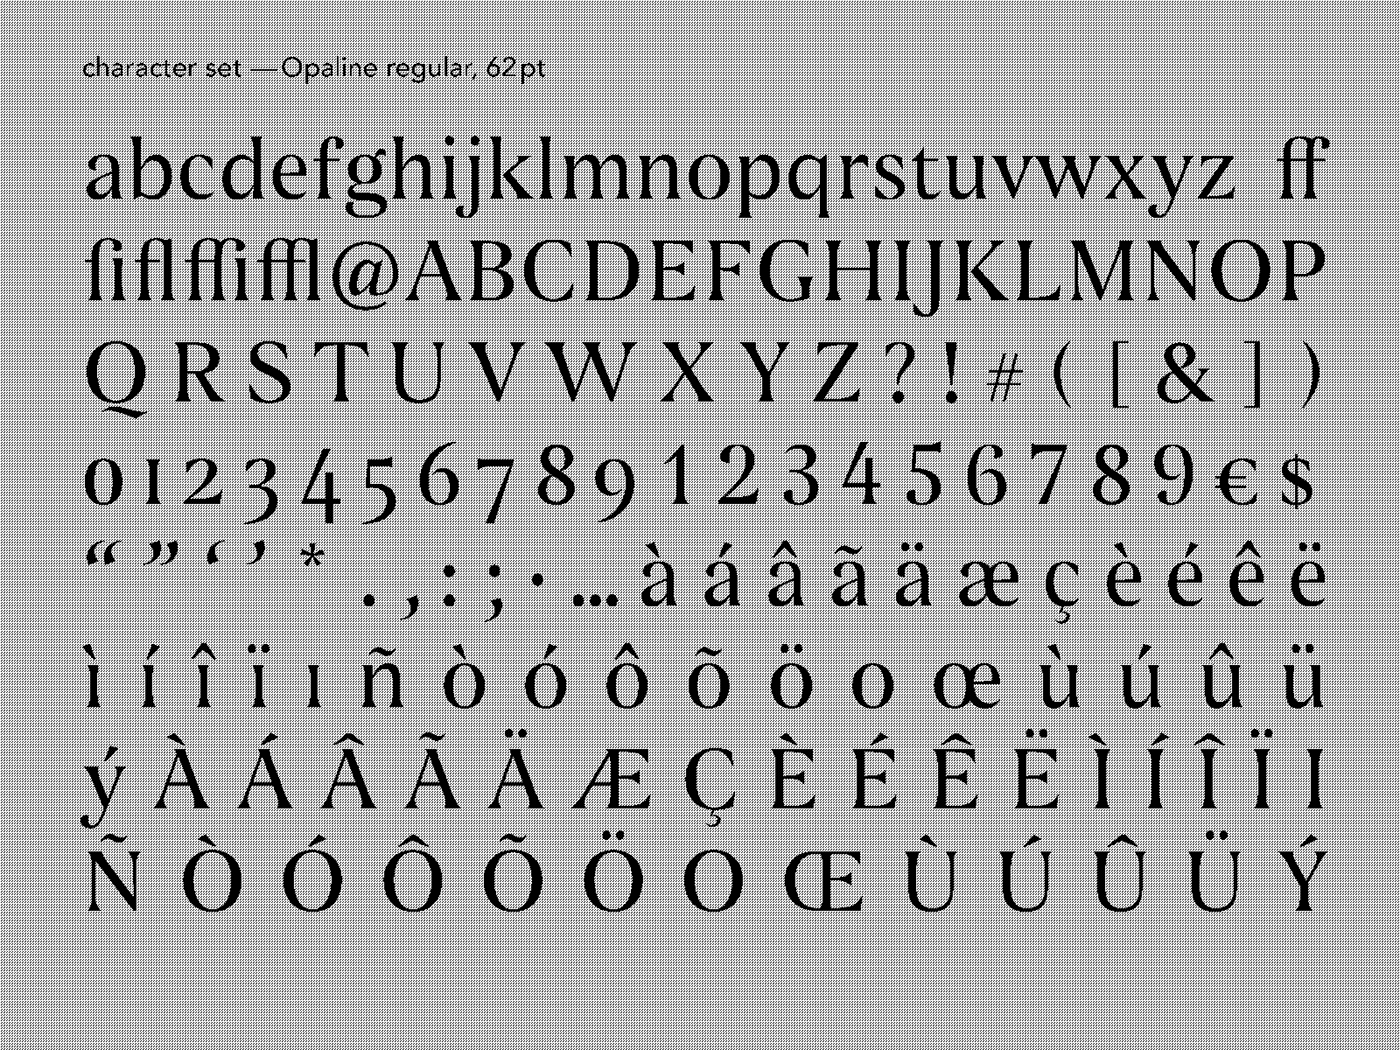 typedesign typeparis typeparis17 graphicdesign margaux saulou